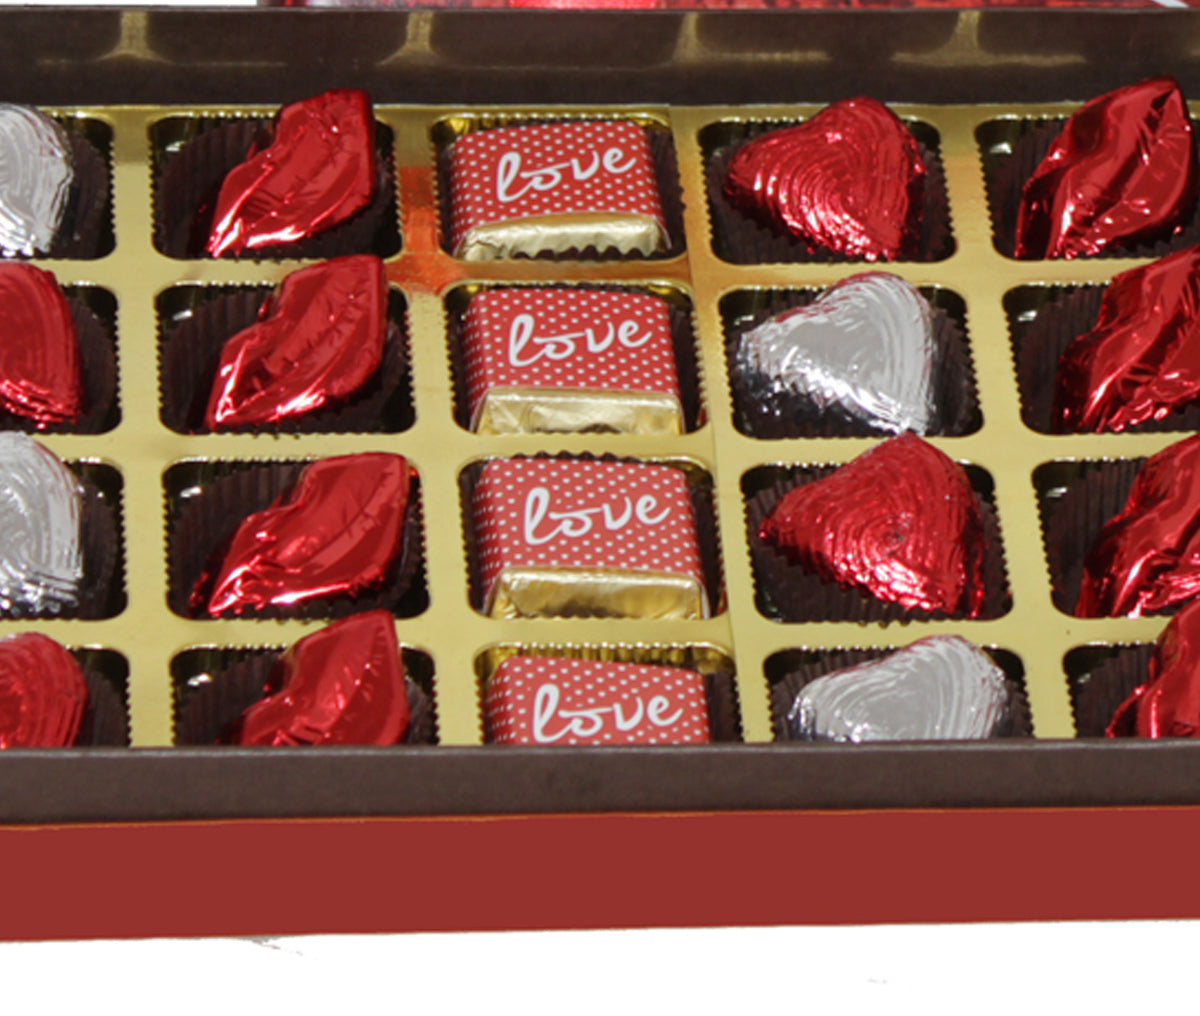 ZOROY LUXURY CHOCOLATE Red Silk Box with Valentines special chocolates